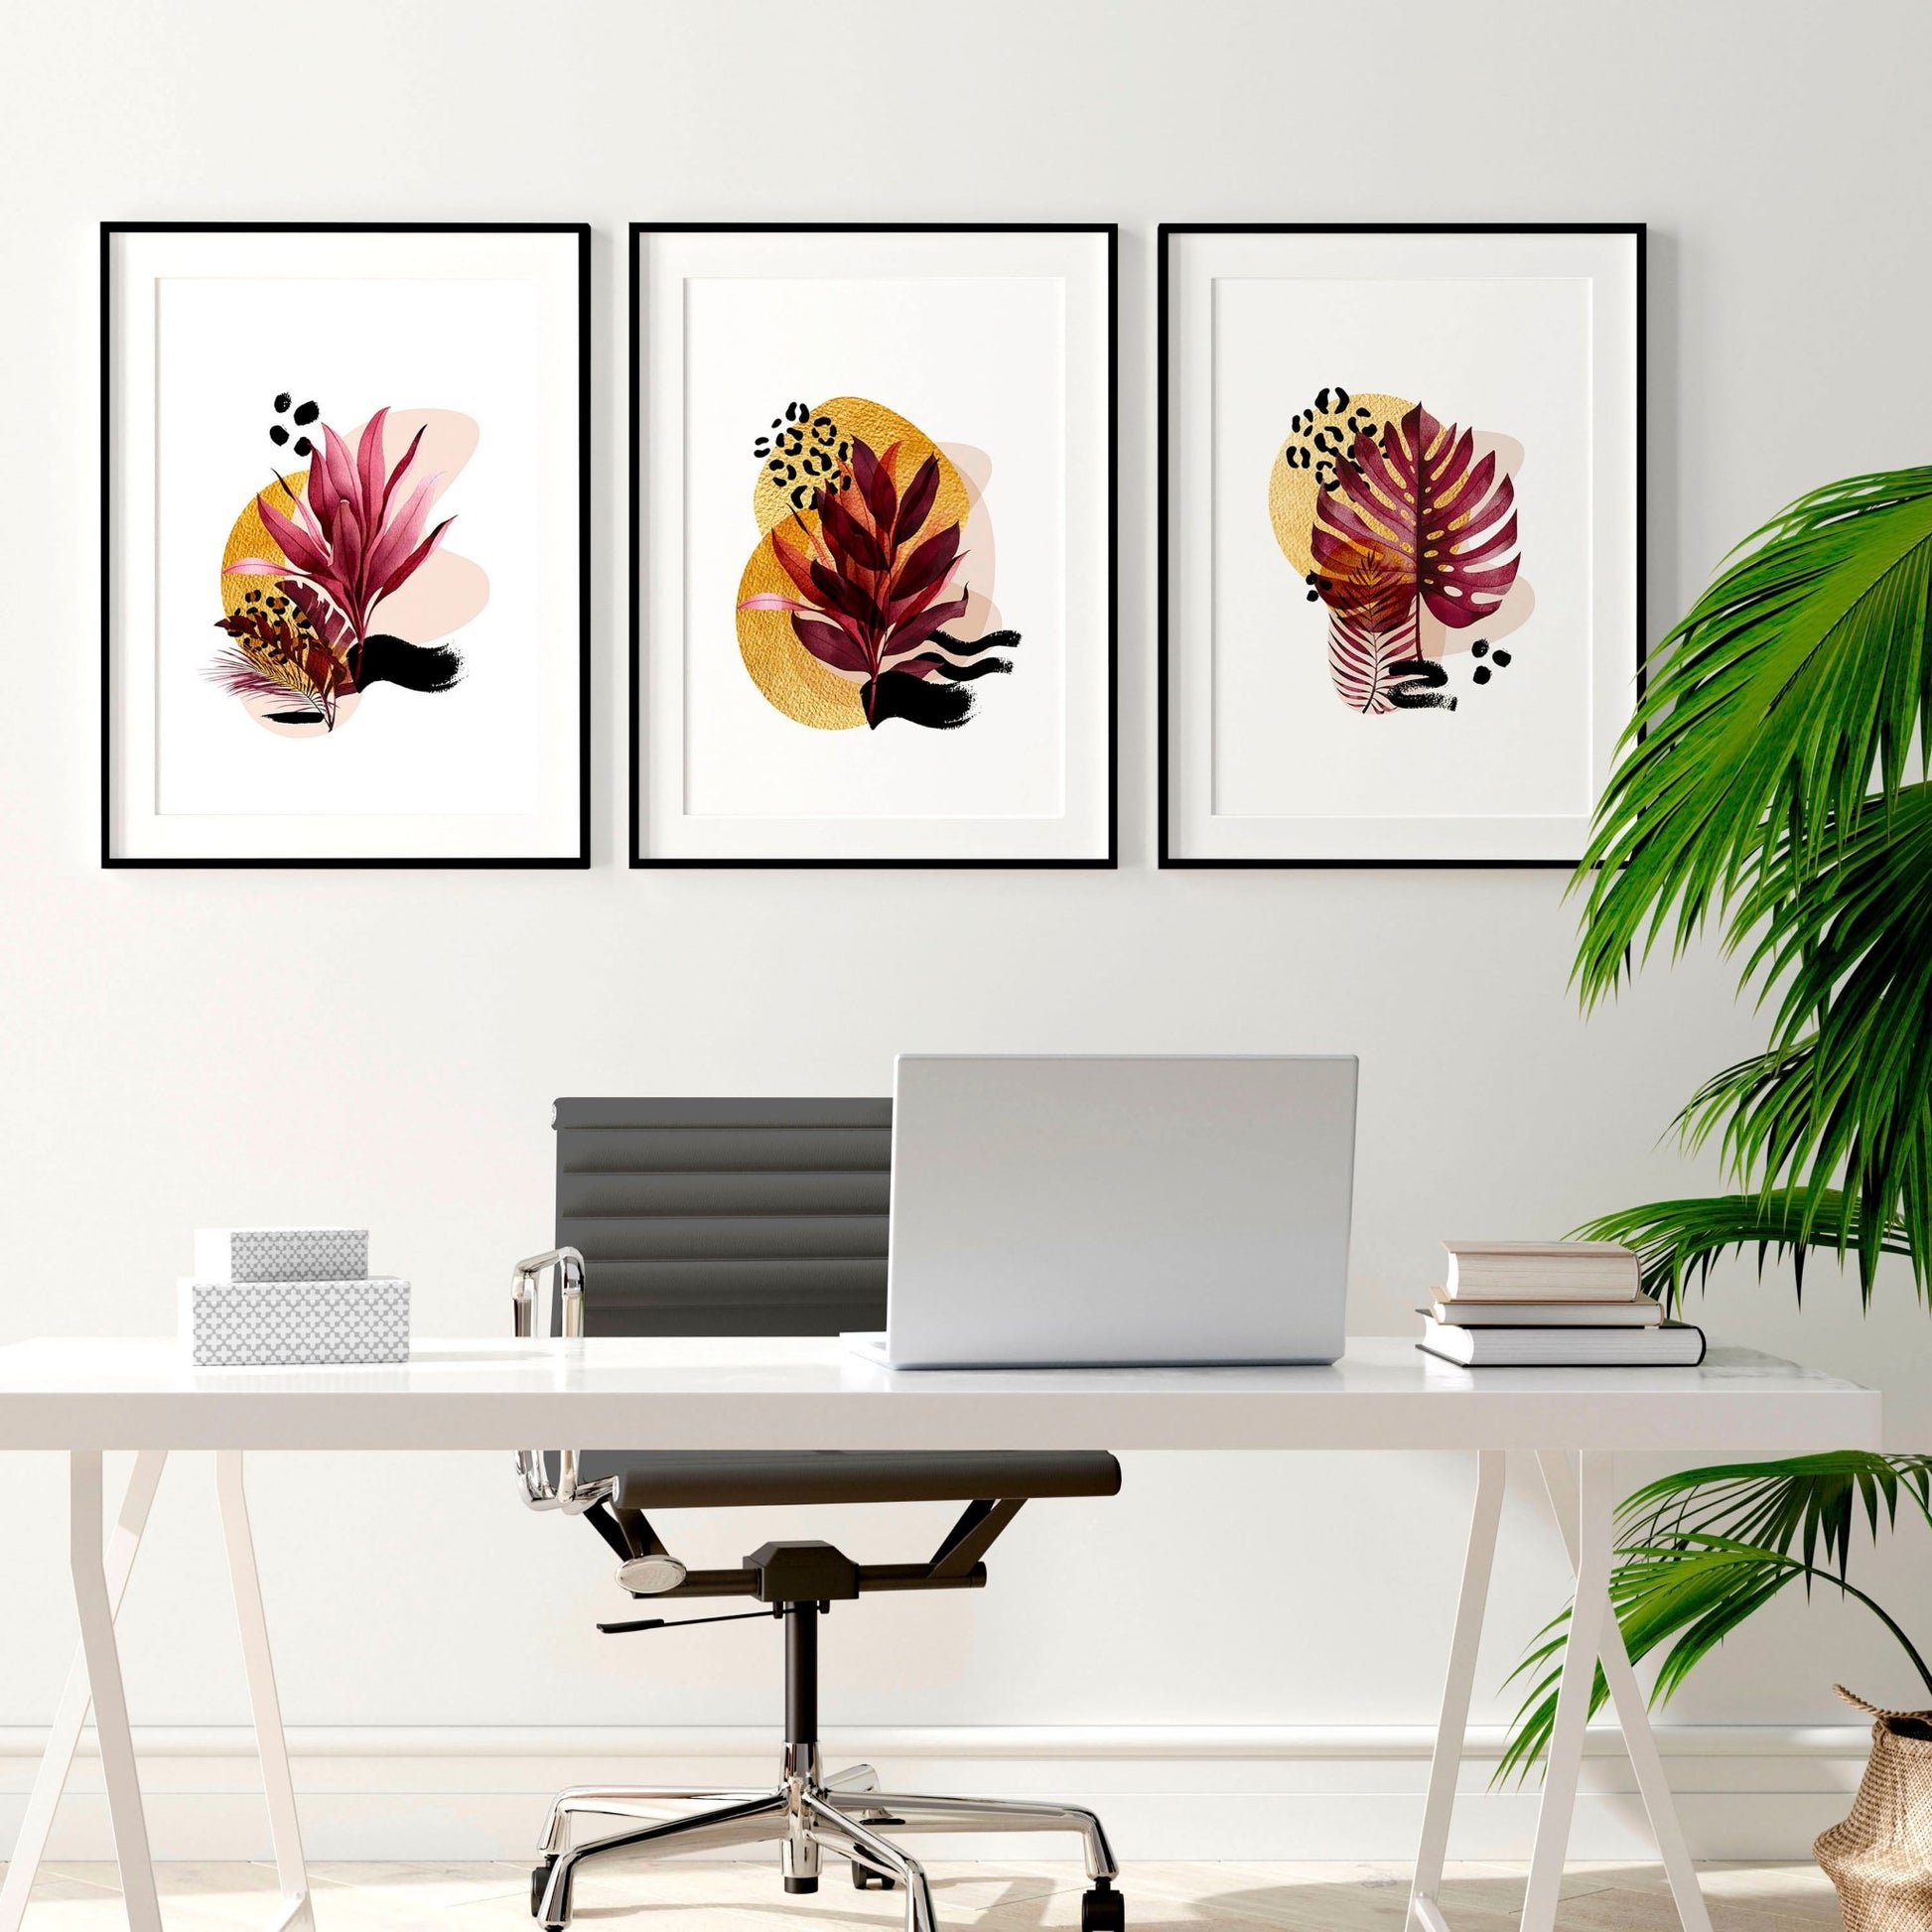 Home office decor ideas for her | set of 3 framed wall art